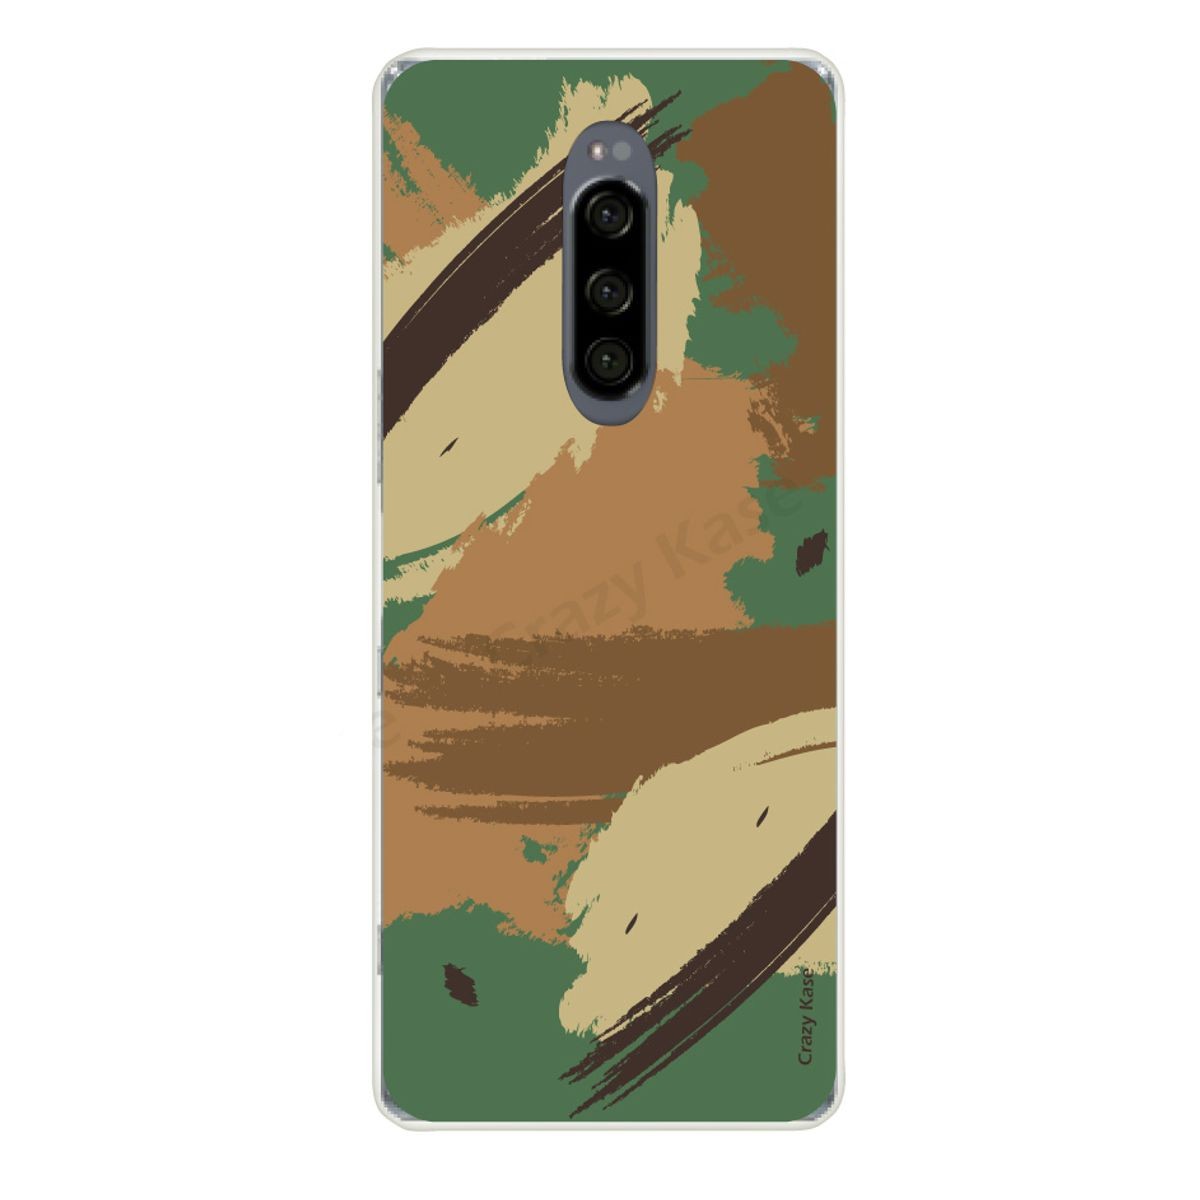 Coque compatible Xperia 1 souple Camouflage - Crazy Kase